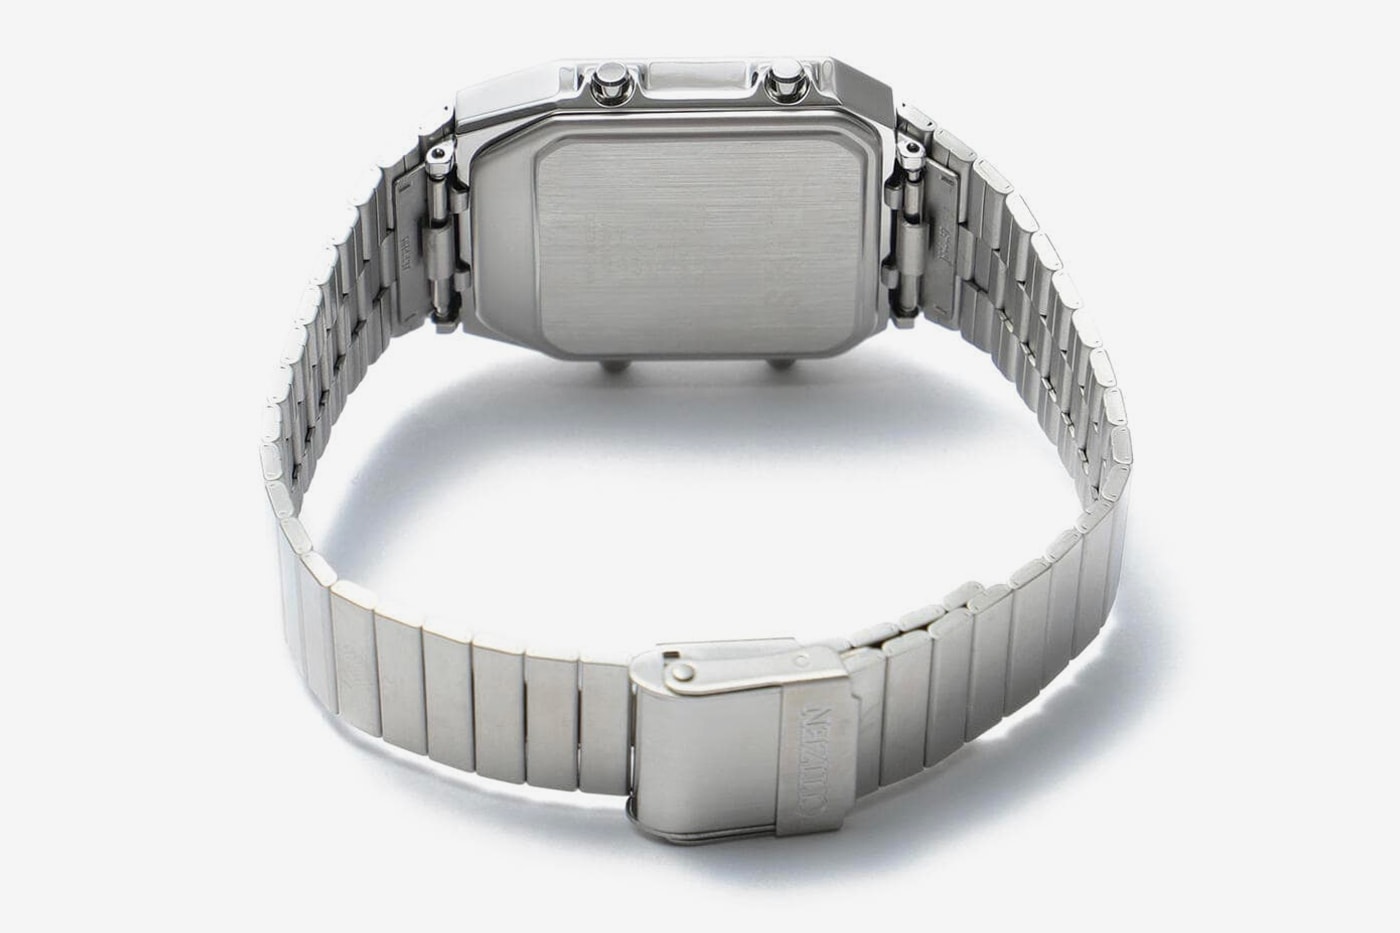 BEAMS Gives Citizen Ana-Digi Temp Watch Artistic Update With Handwritten Dial digital dial japan Watches accessories 